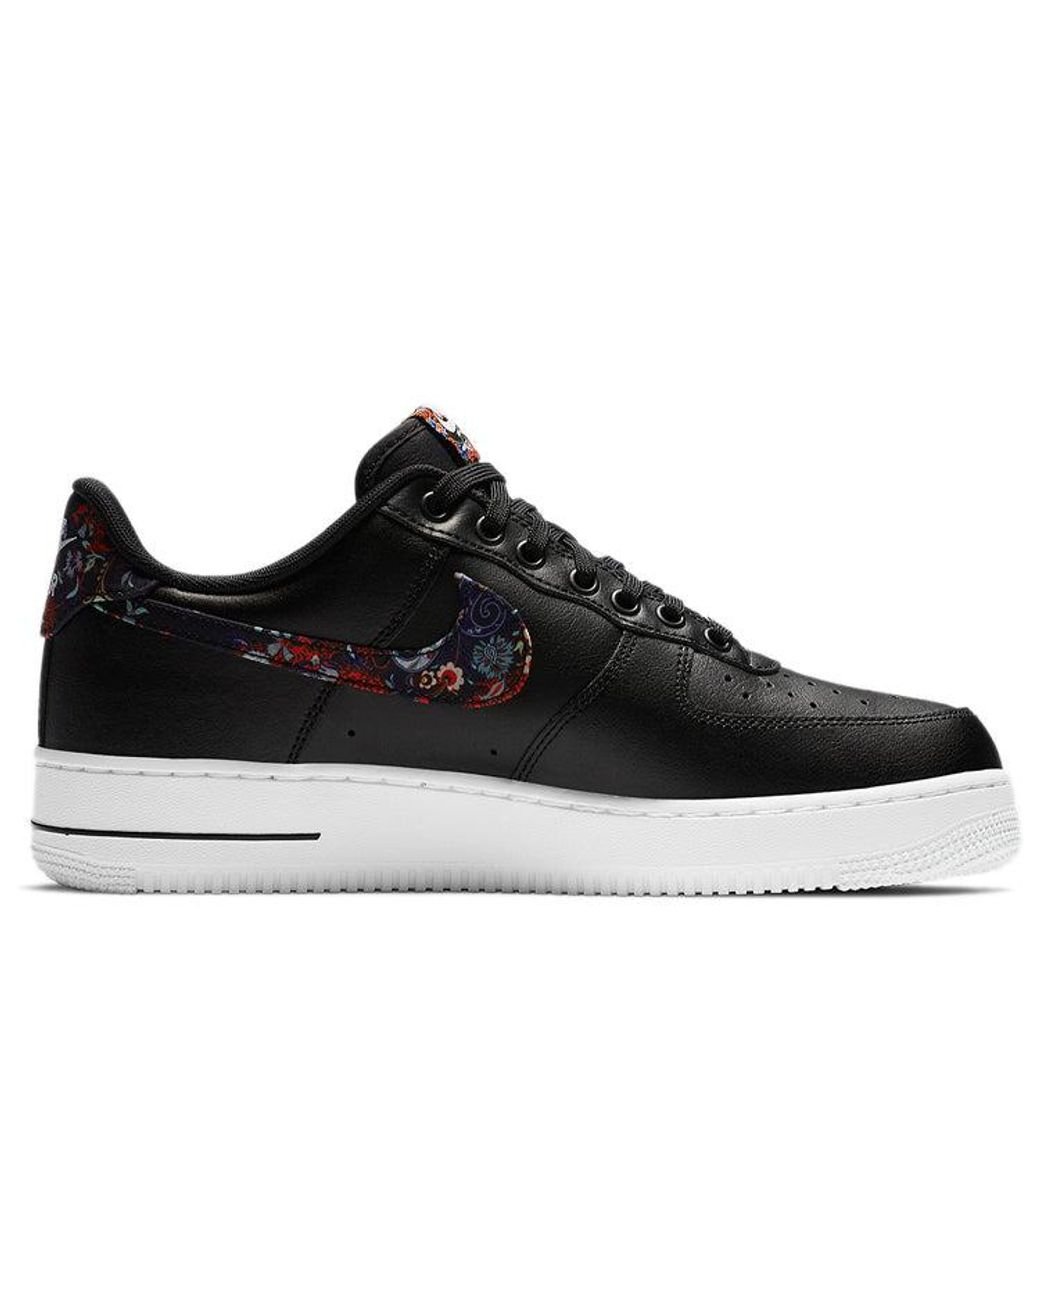 Nike Air Force 1 Low Floral in Black | Lyst